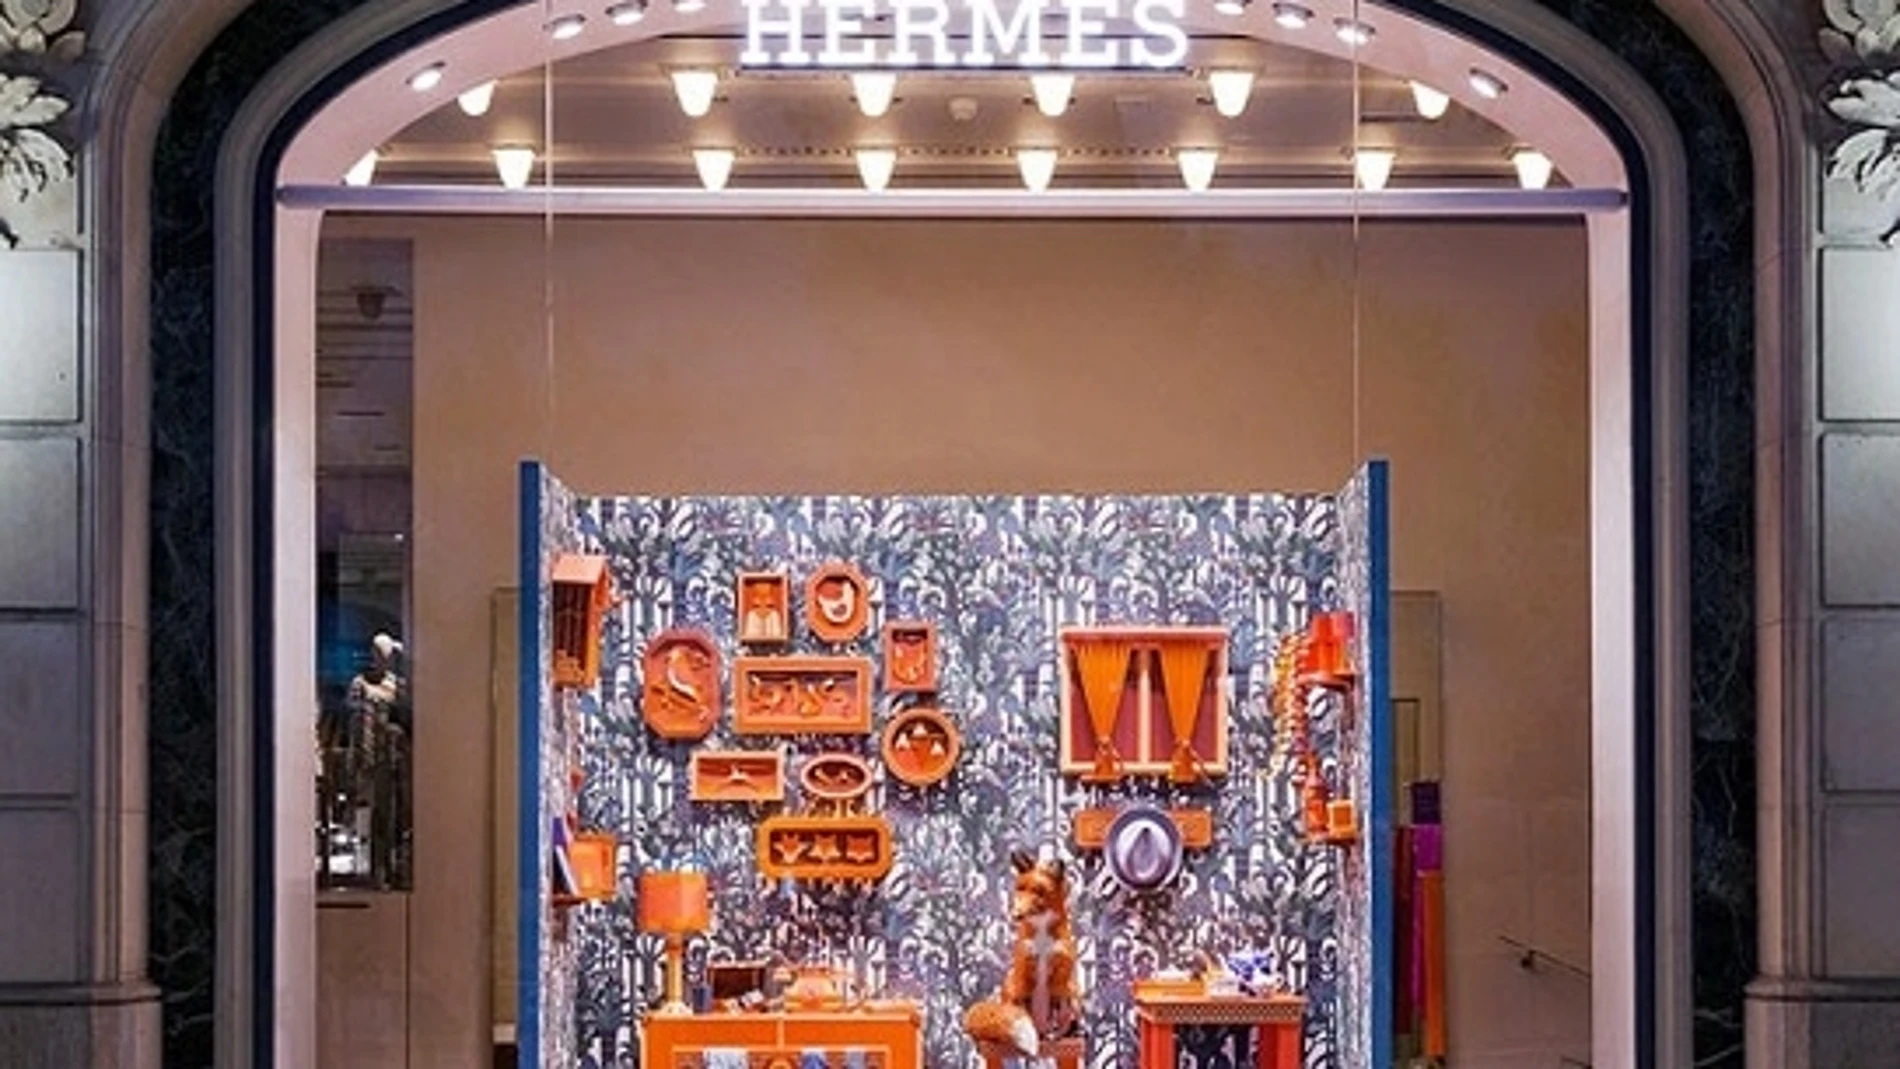 Tienda Hermès